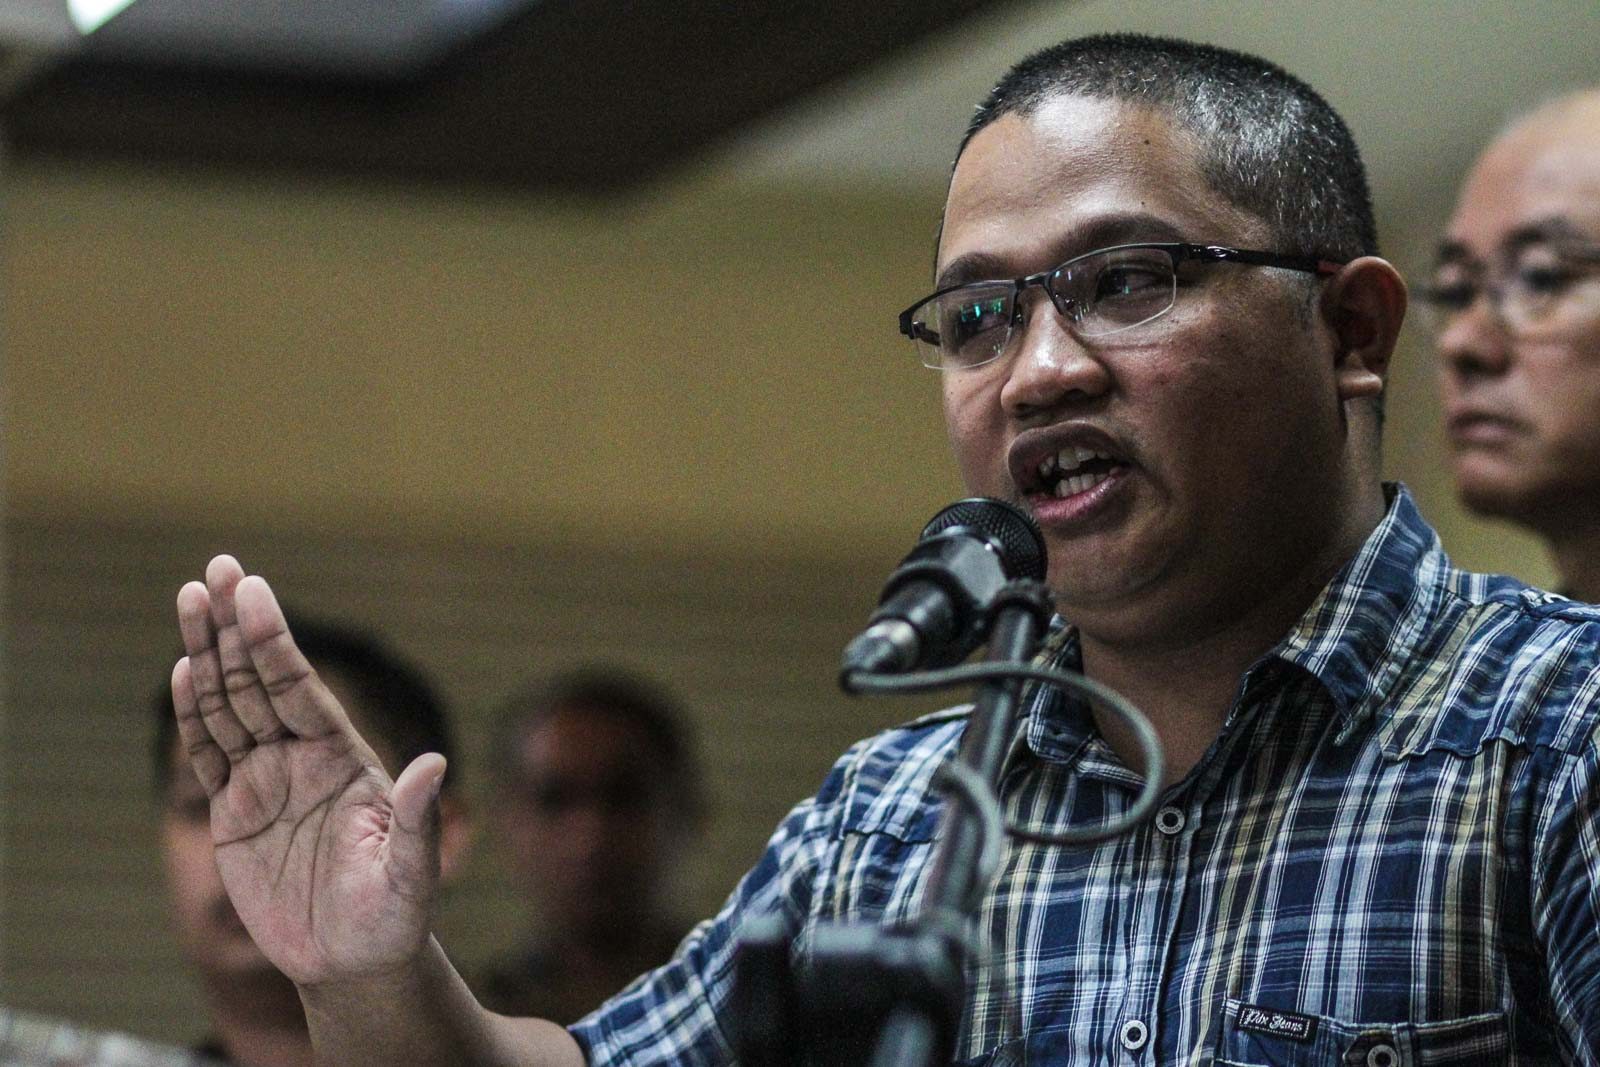 ‘Lahat ‘yan gawa-gawa’: Bikoy recants claims vs Duterte, Aquino administrations